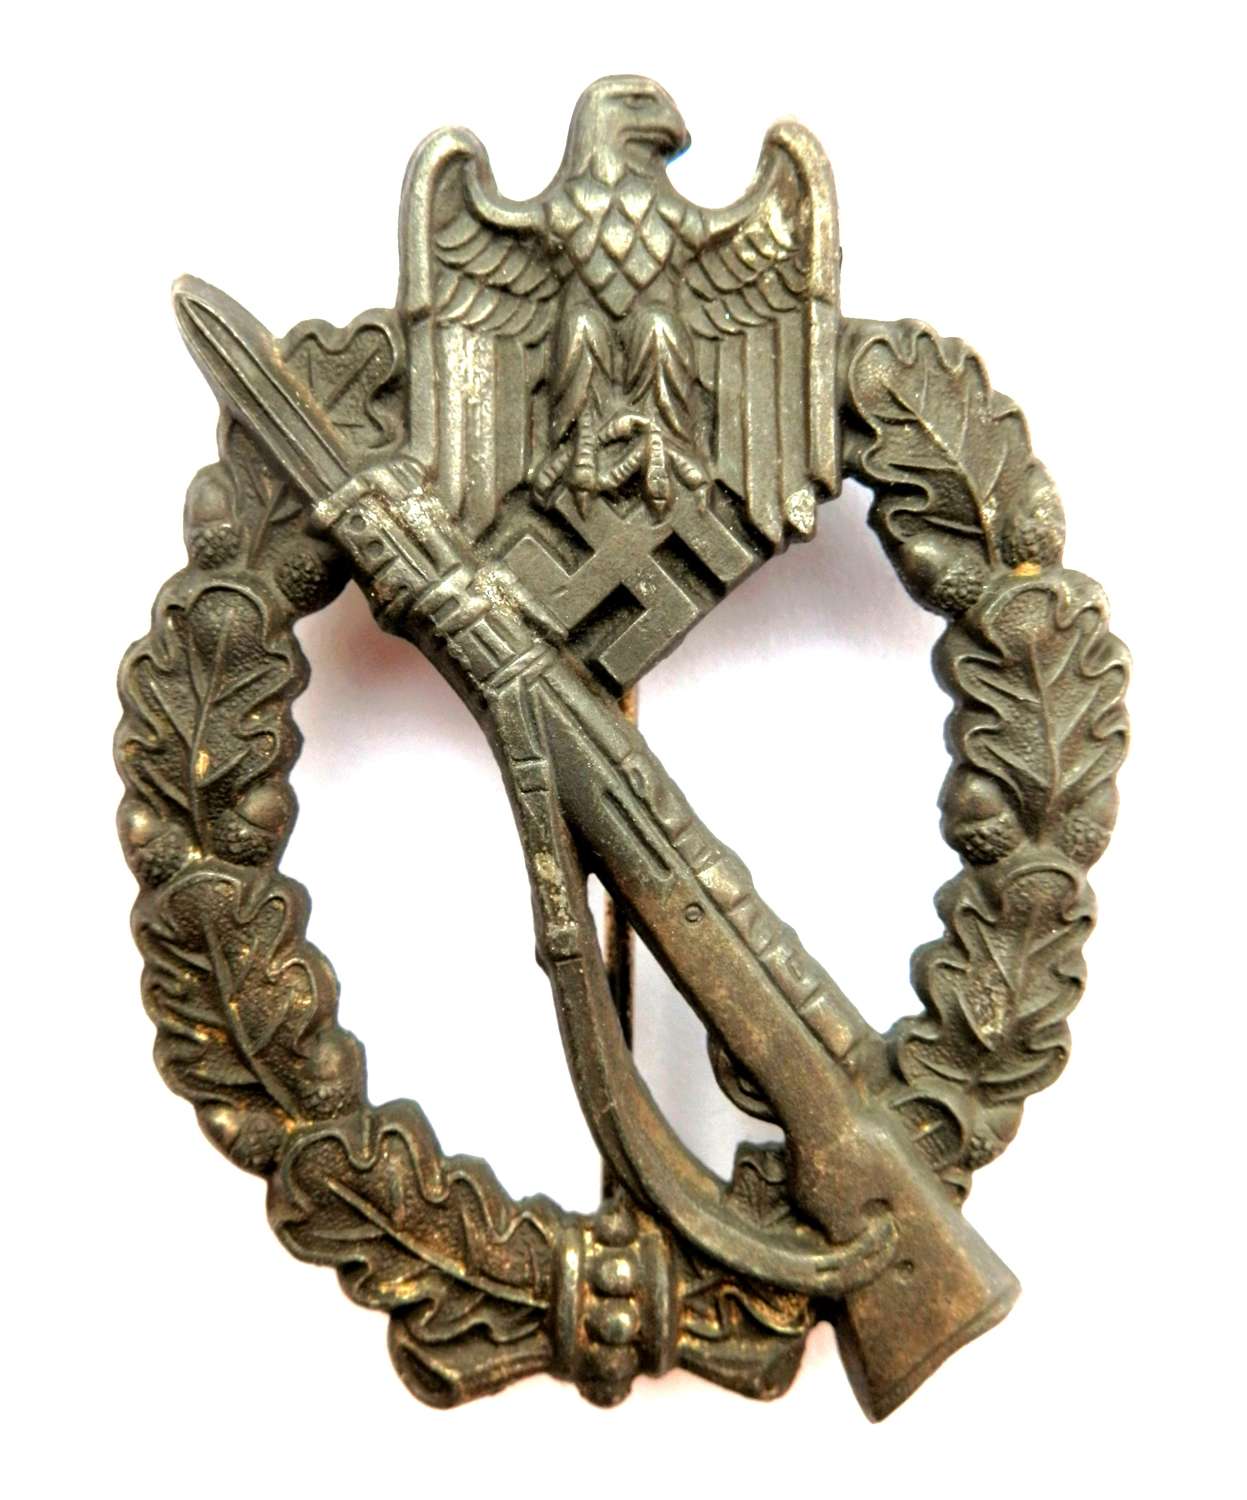 German Infantry Assault Badge. By ‘R.S.’, Rudolf Souval.